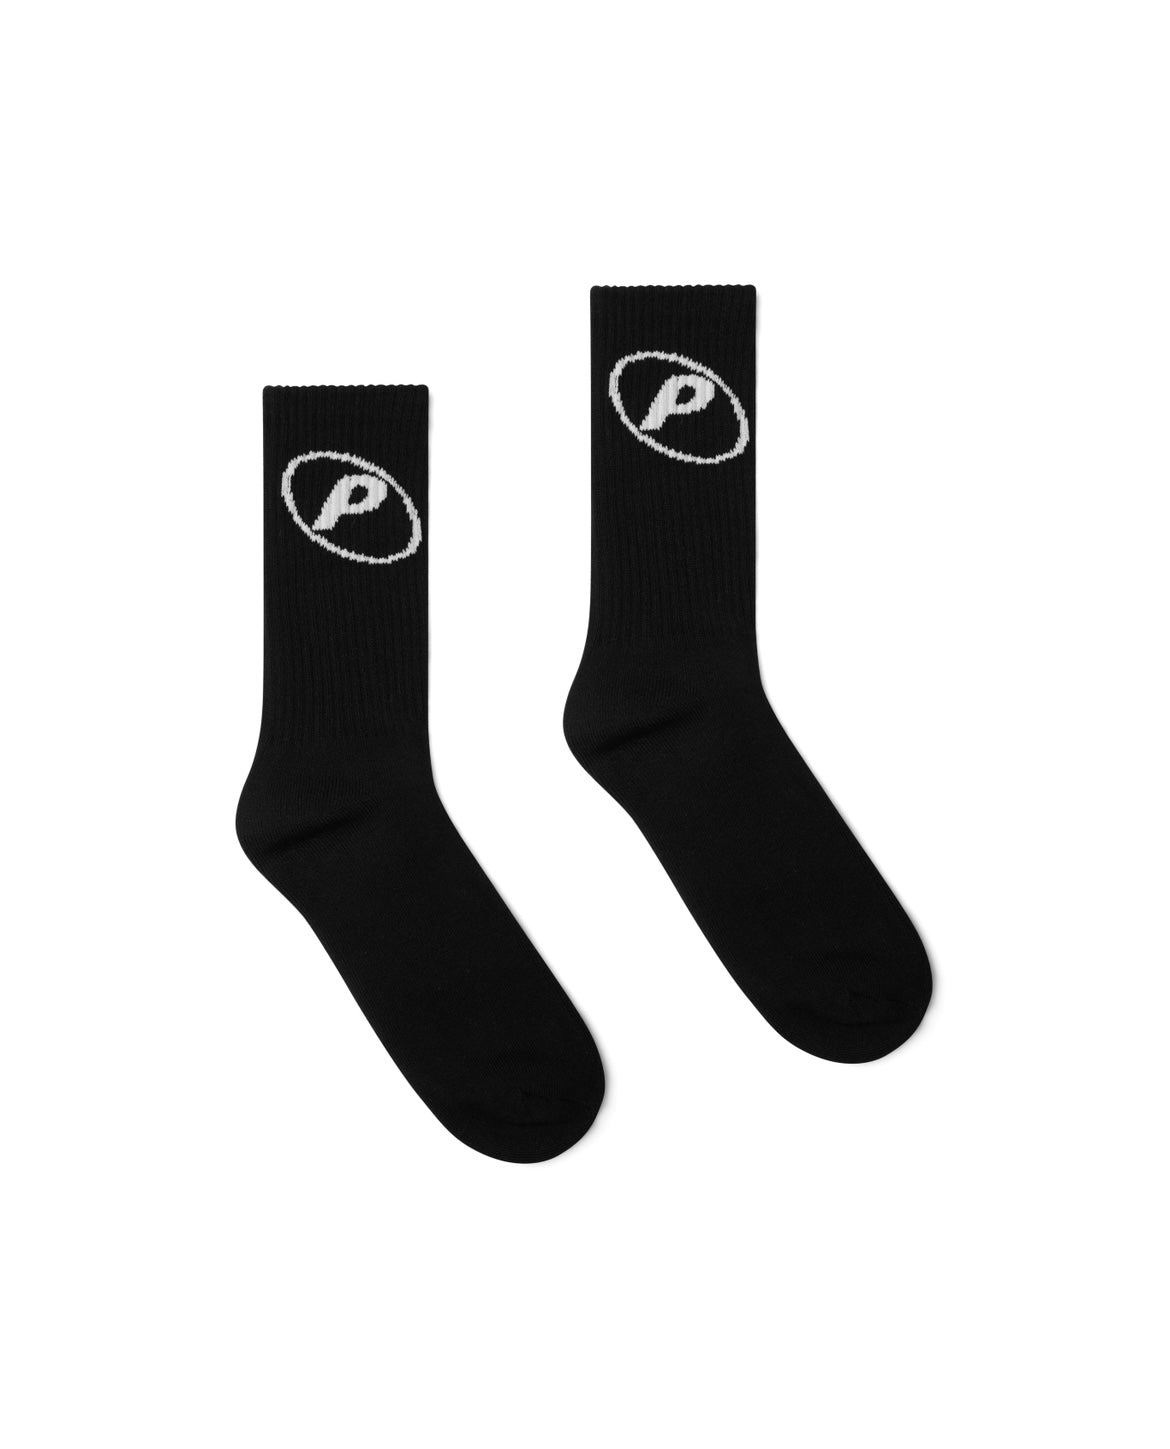 P Crew Socks (black)